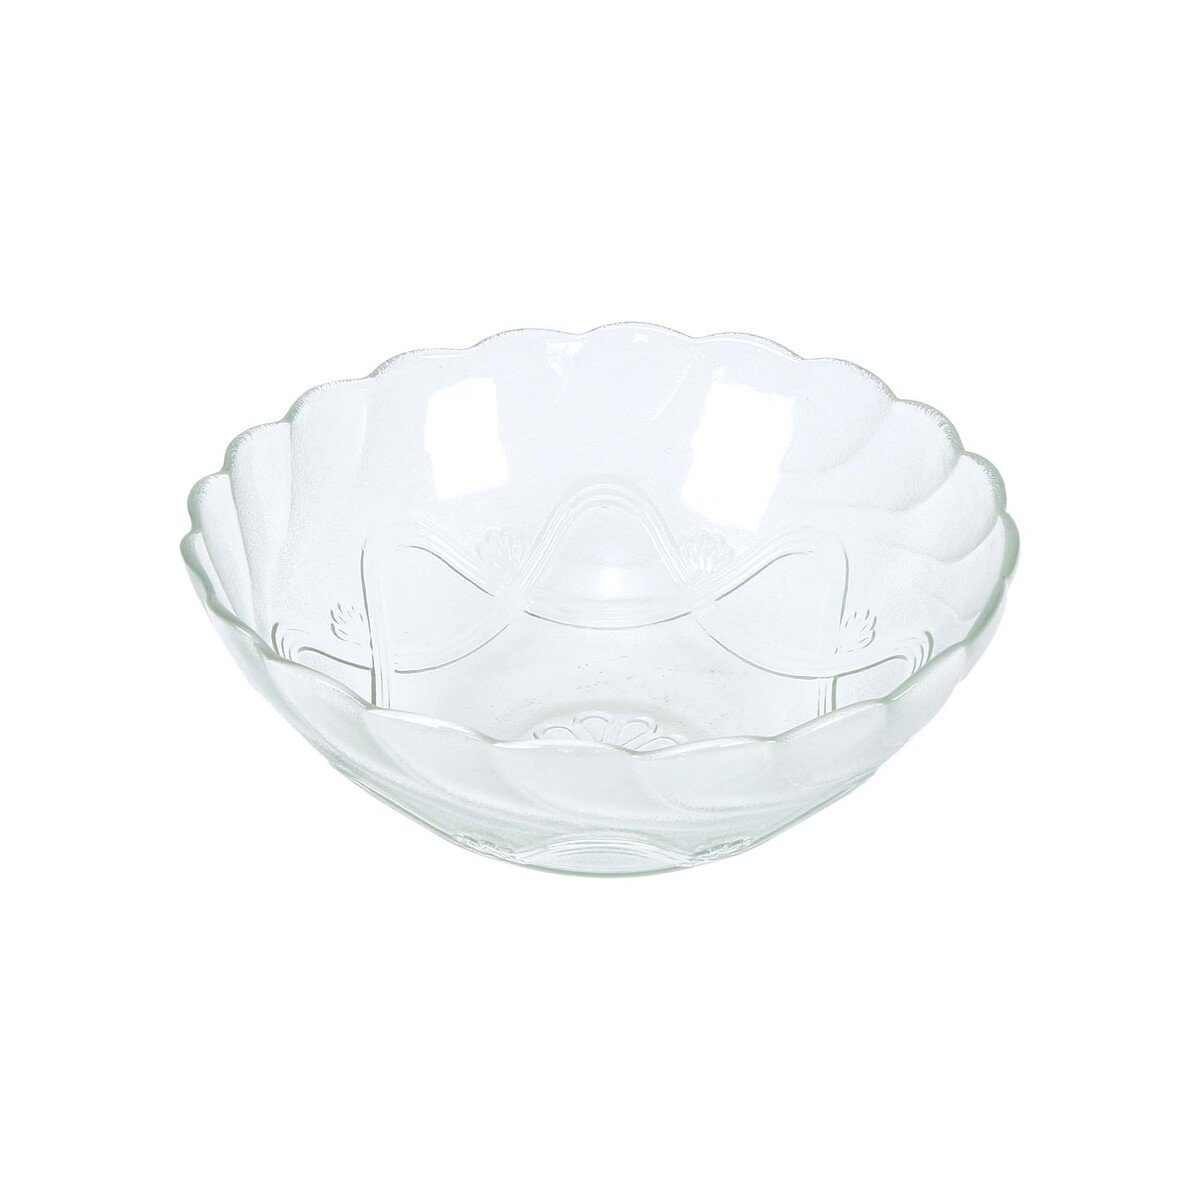 Migi Glass Bowl BW-915 22.4cm